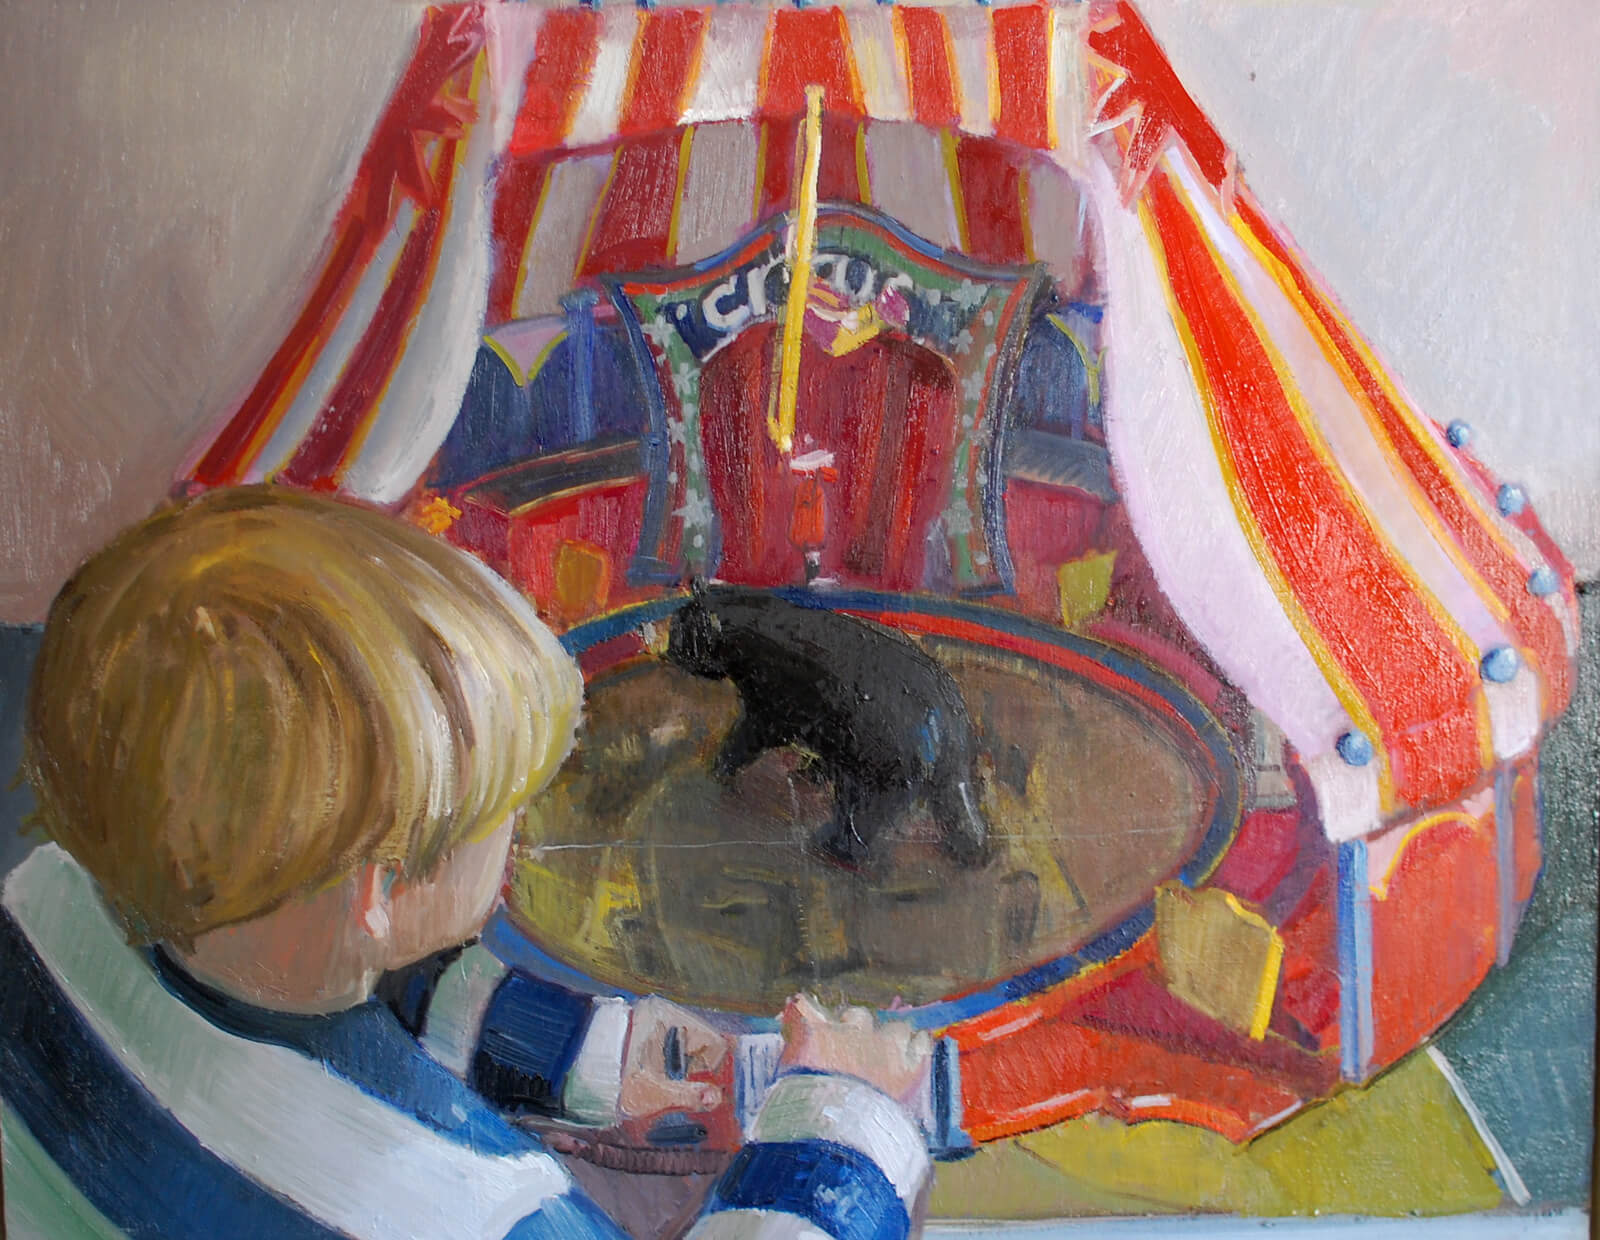 Victoria Barnes, Circus, 2013, oil on canvas, 24 × 30 inches (courtesy of the artist)